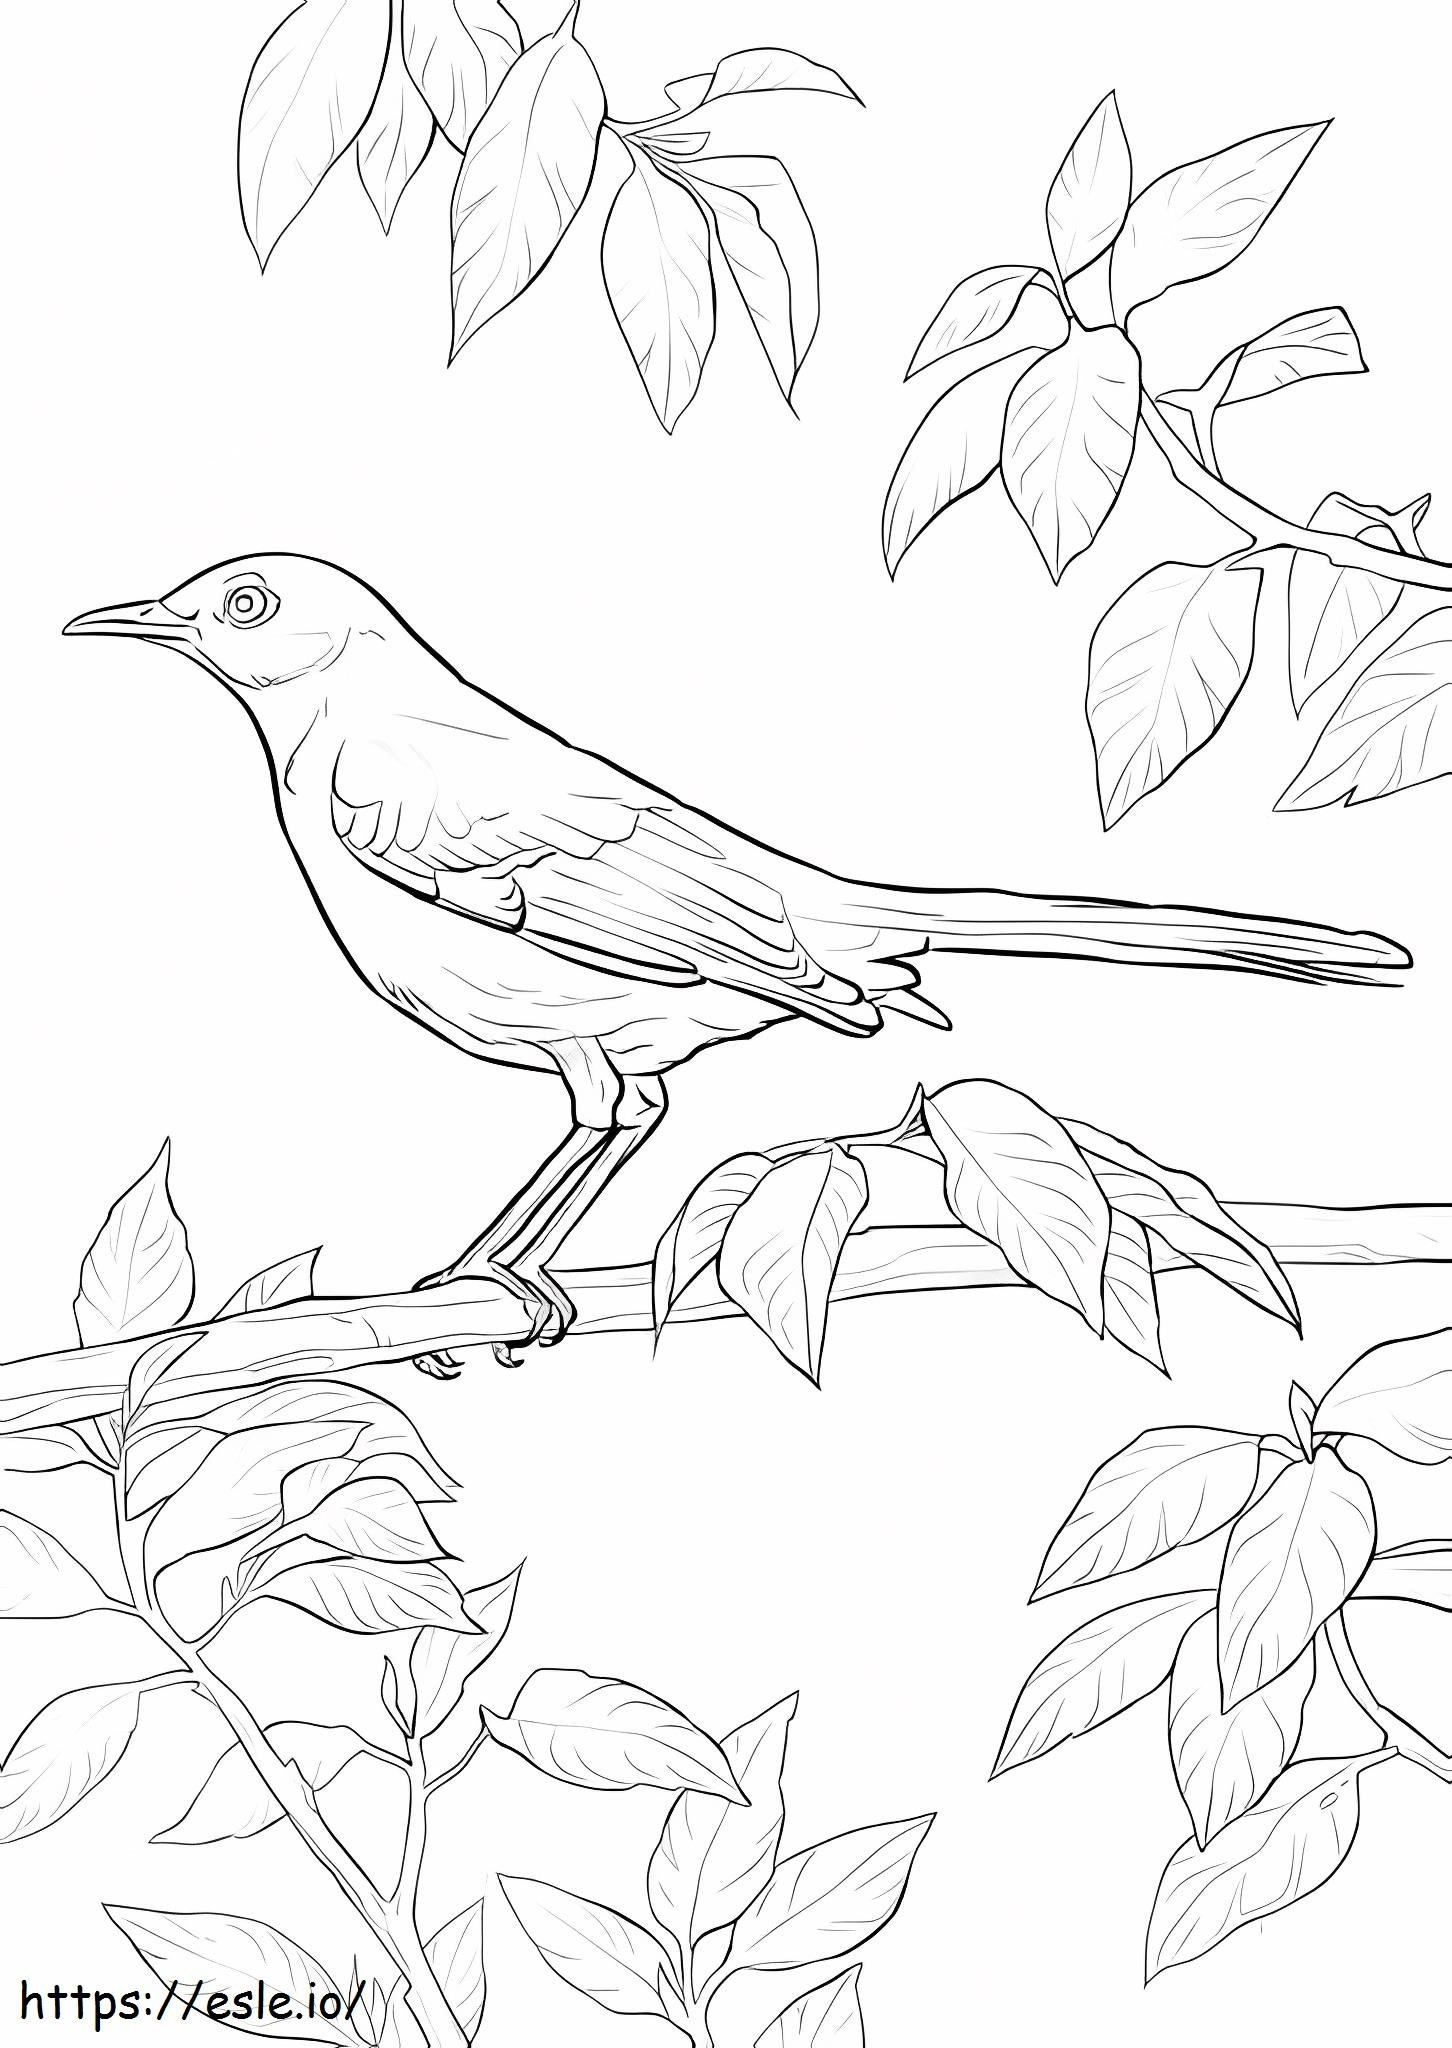 Northern Mockingbird coloring page